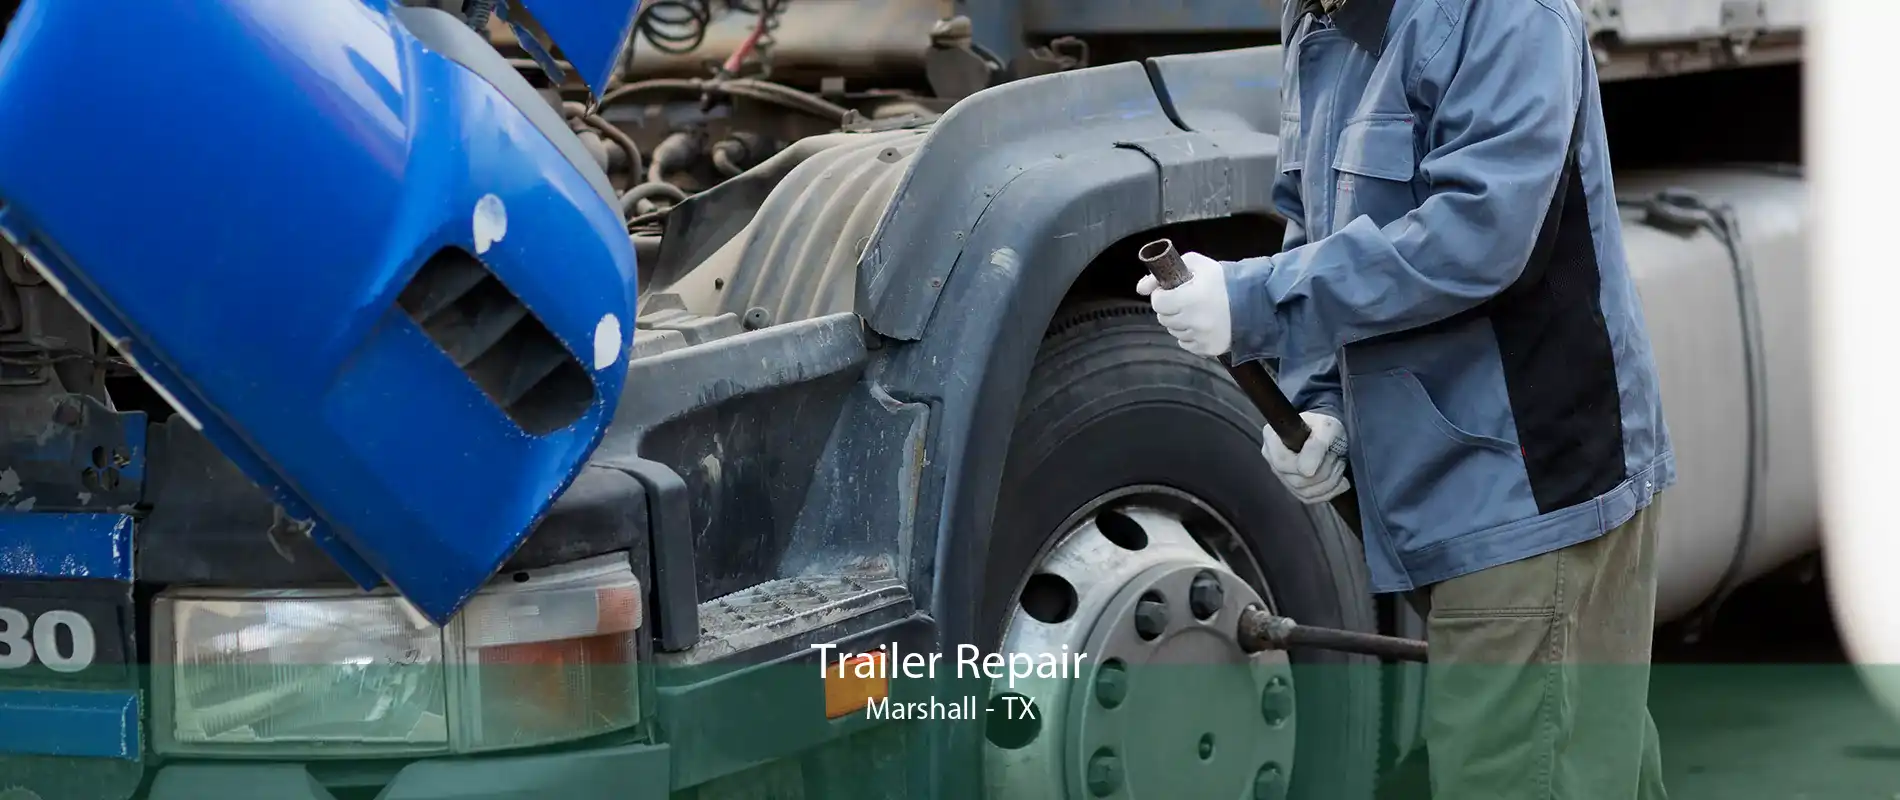 Trailer Repair Marshall - TX